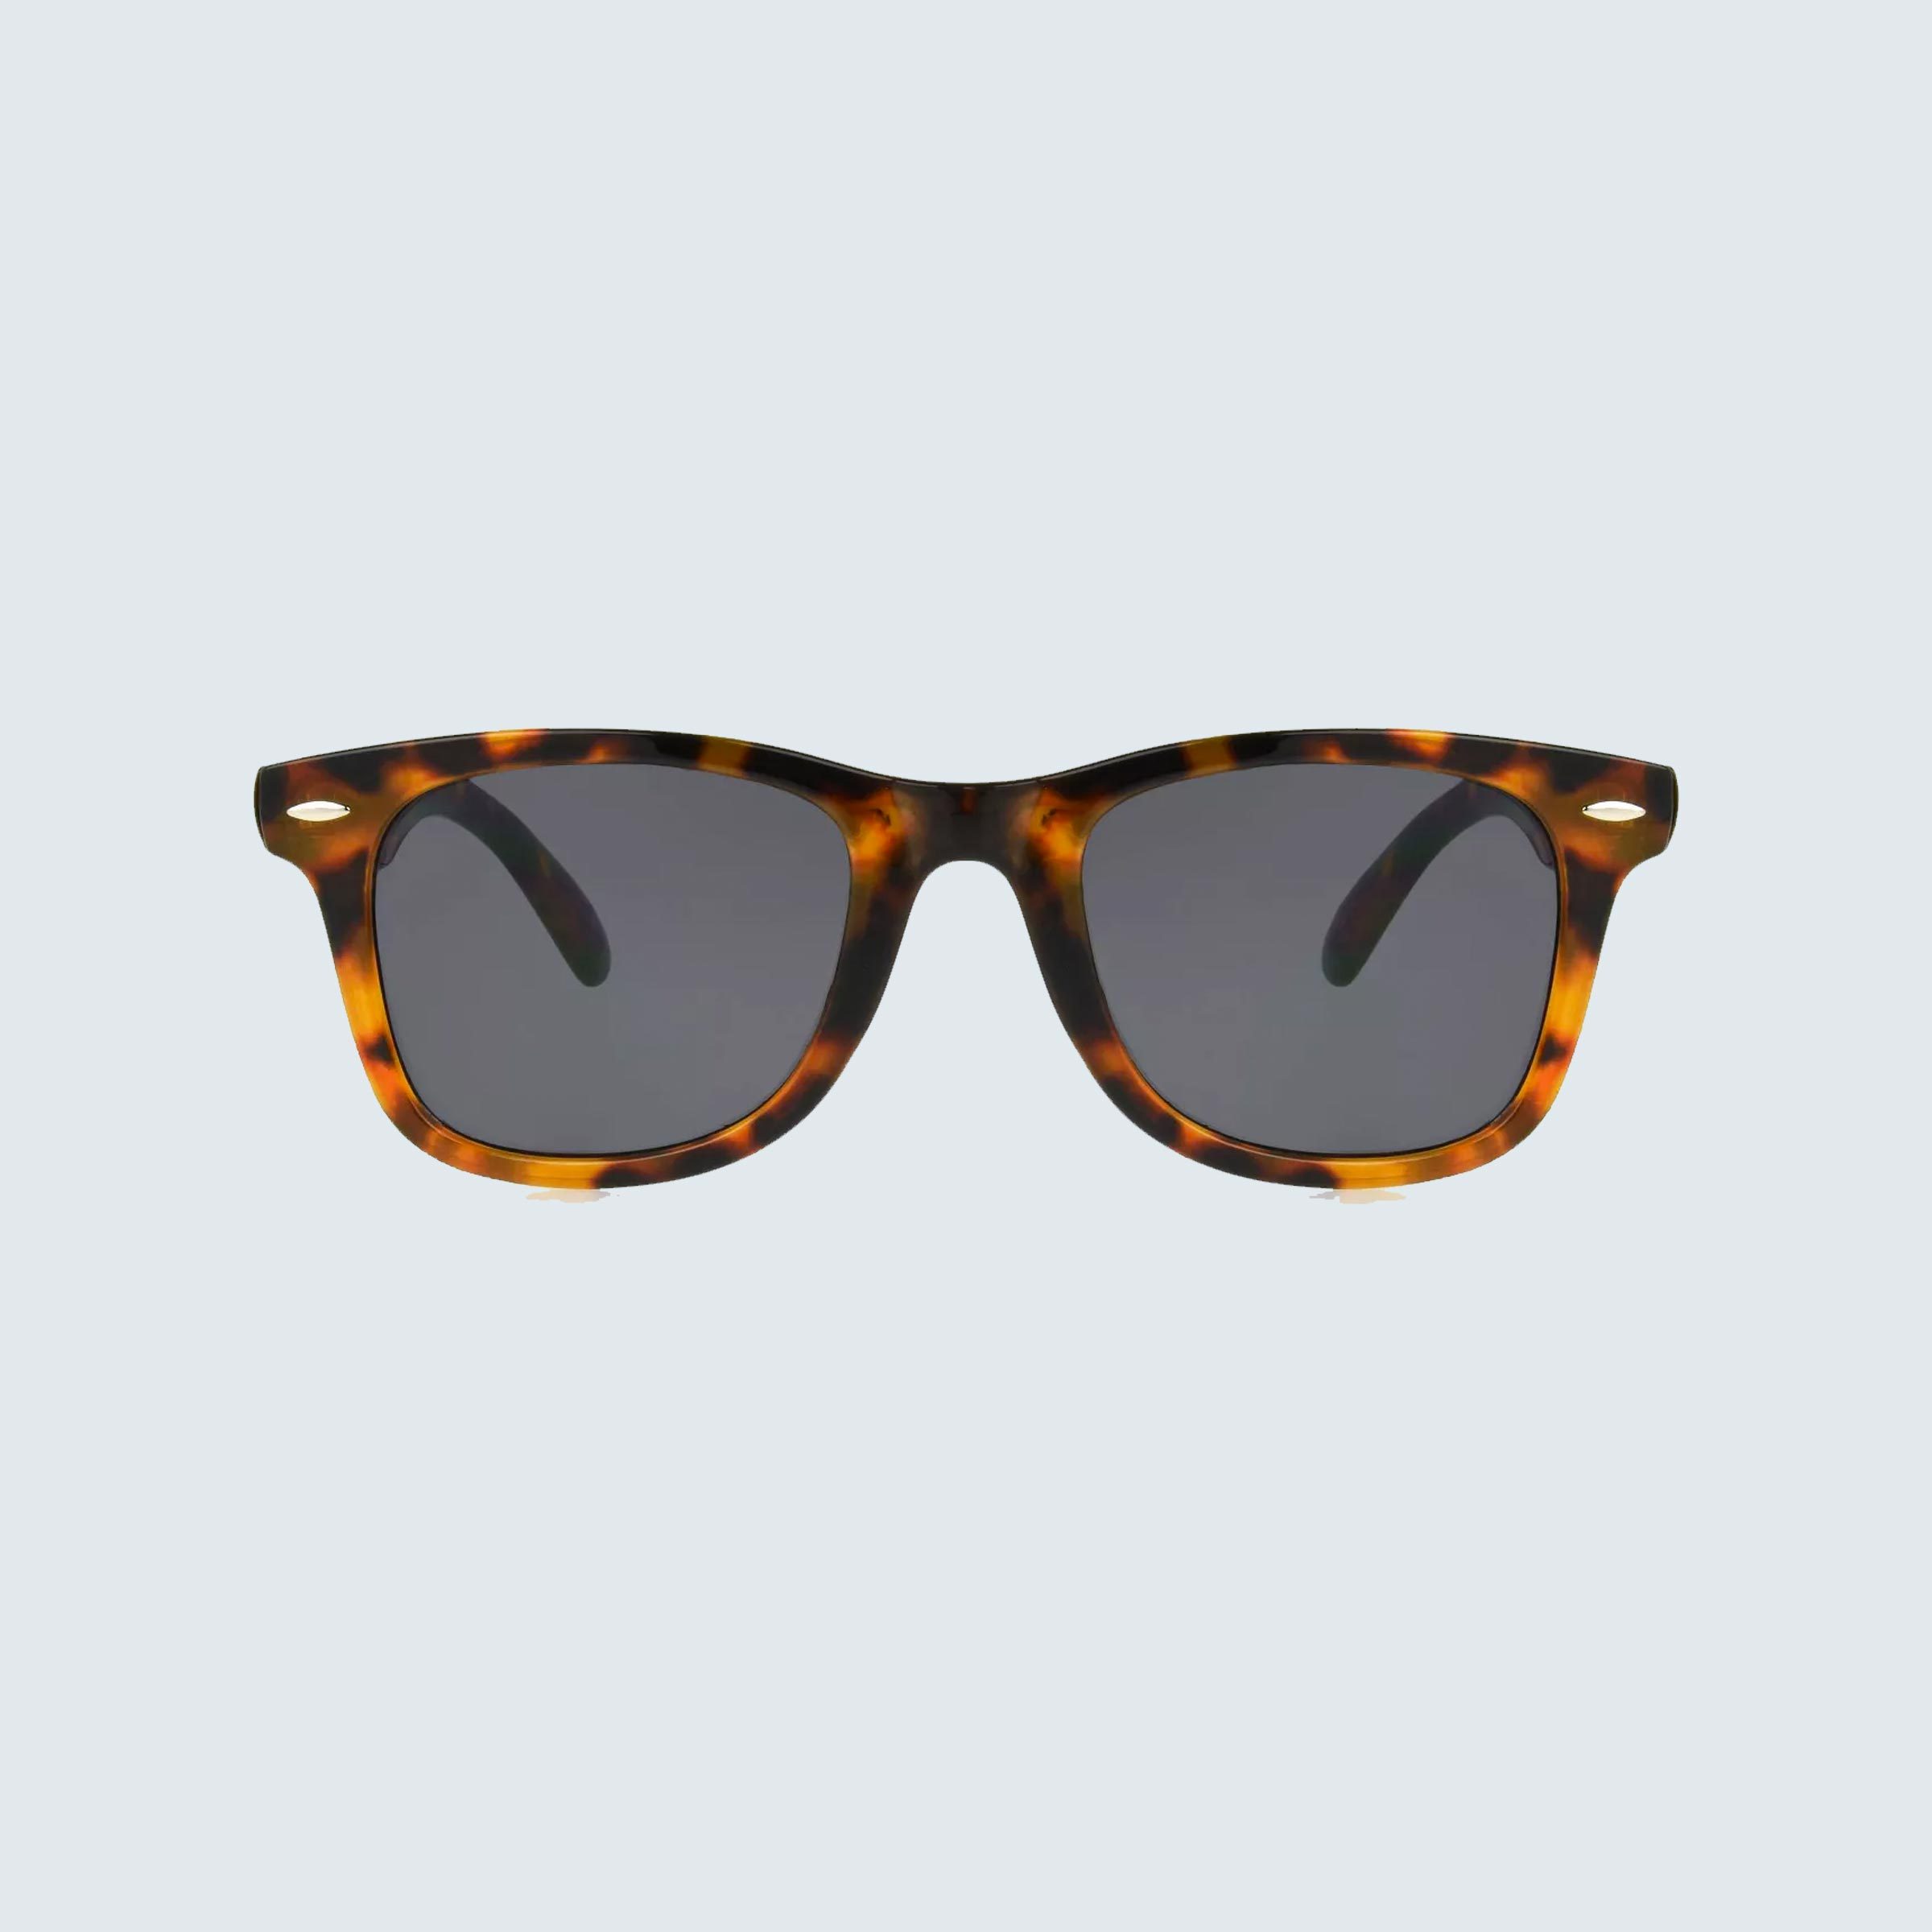 Best cheap sunglasses for beach lovers